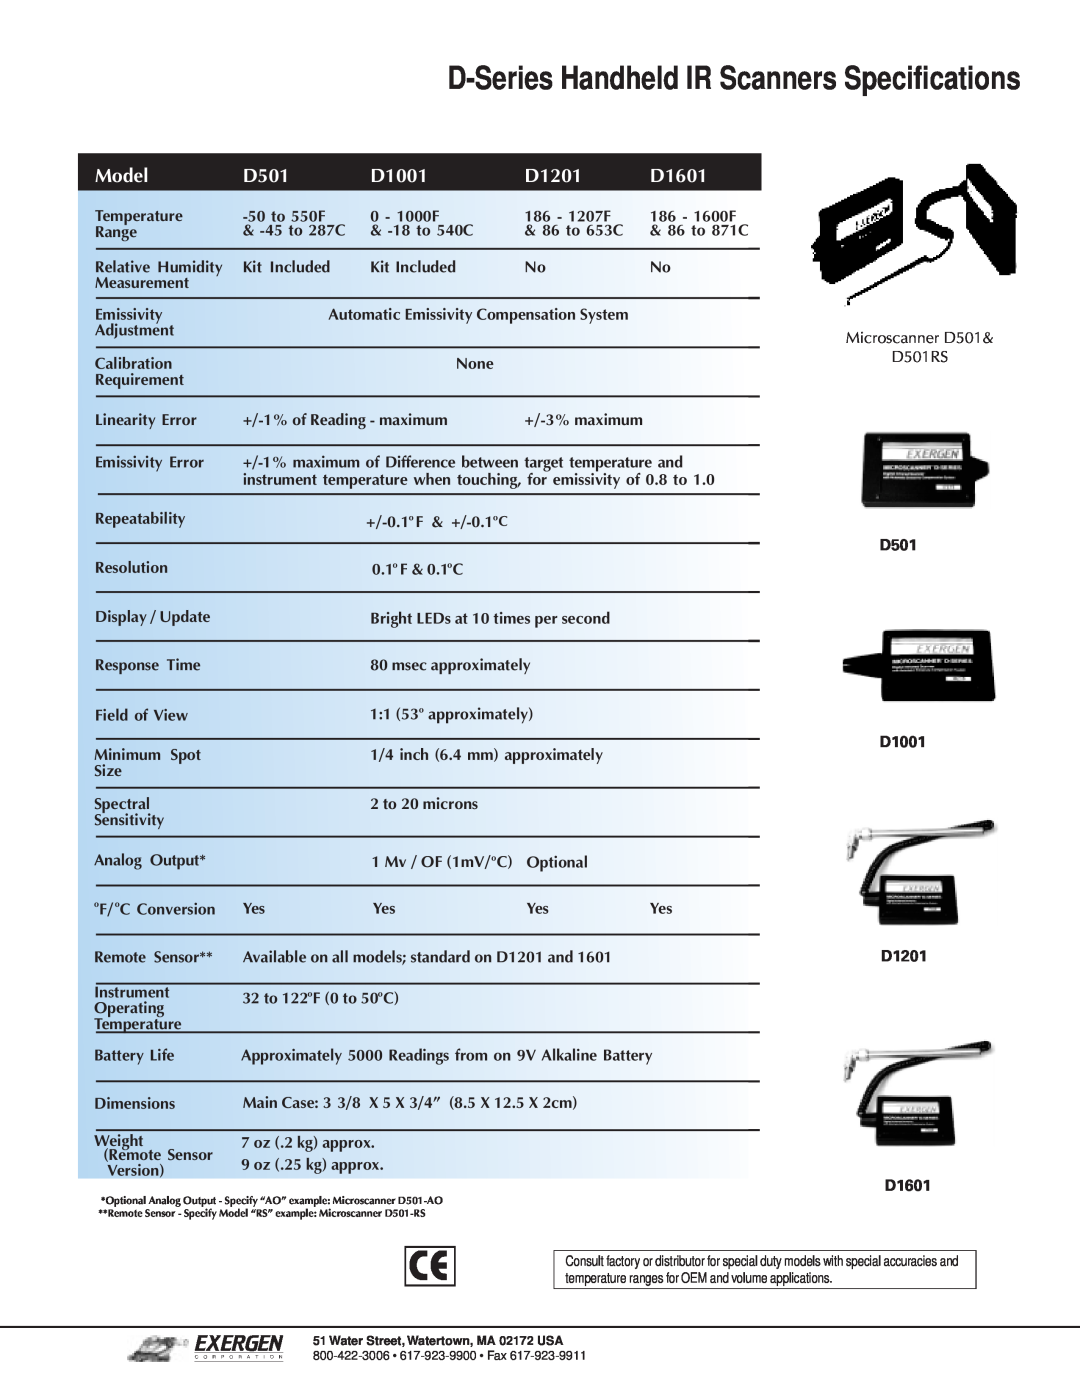 Exergen manual D-Series Handheld IR Scanners Specifications, Model, D501, D1001, D1201, D1601 